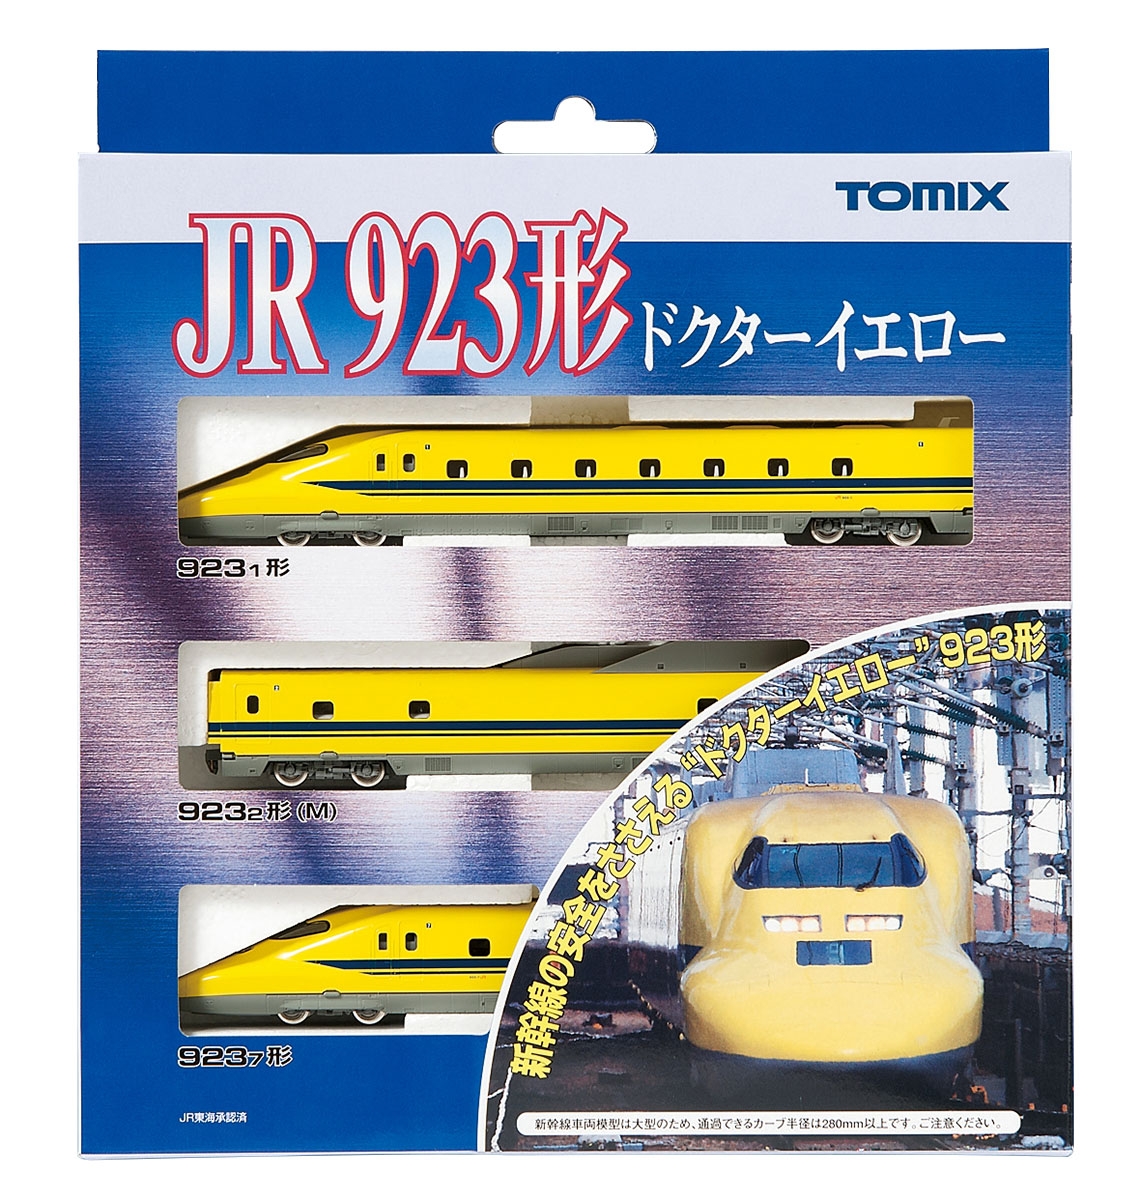 JR 923形新幹線電気軌道総合試験車（ドクターイエロー）基本セット 